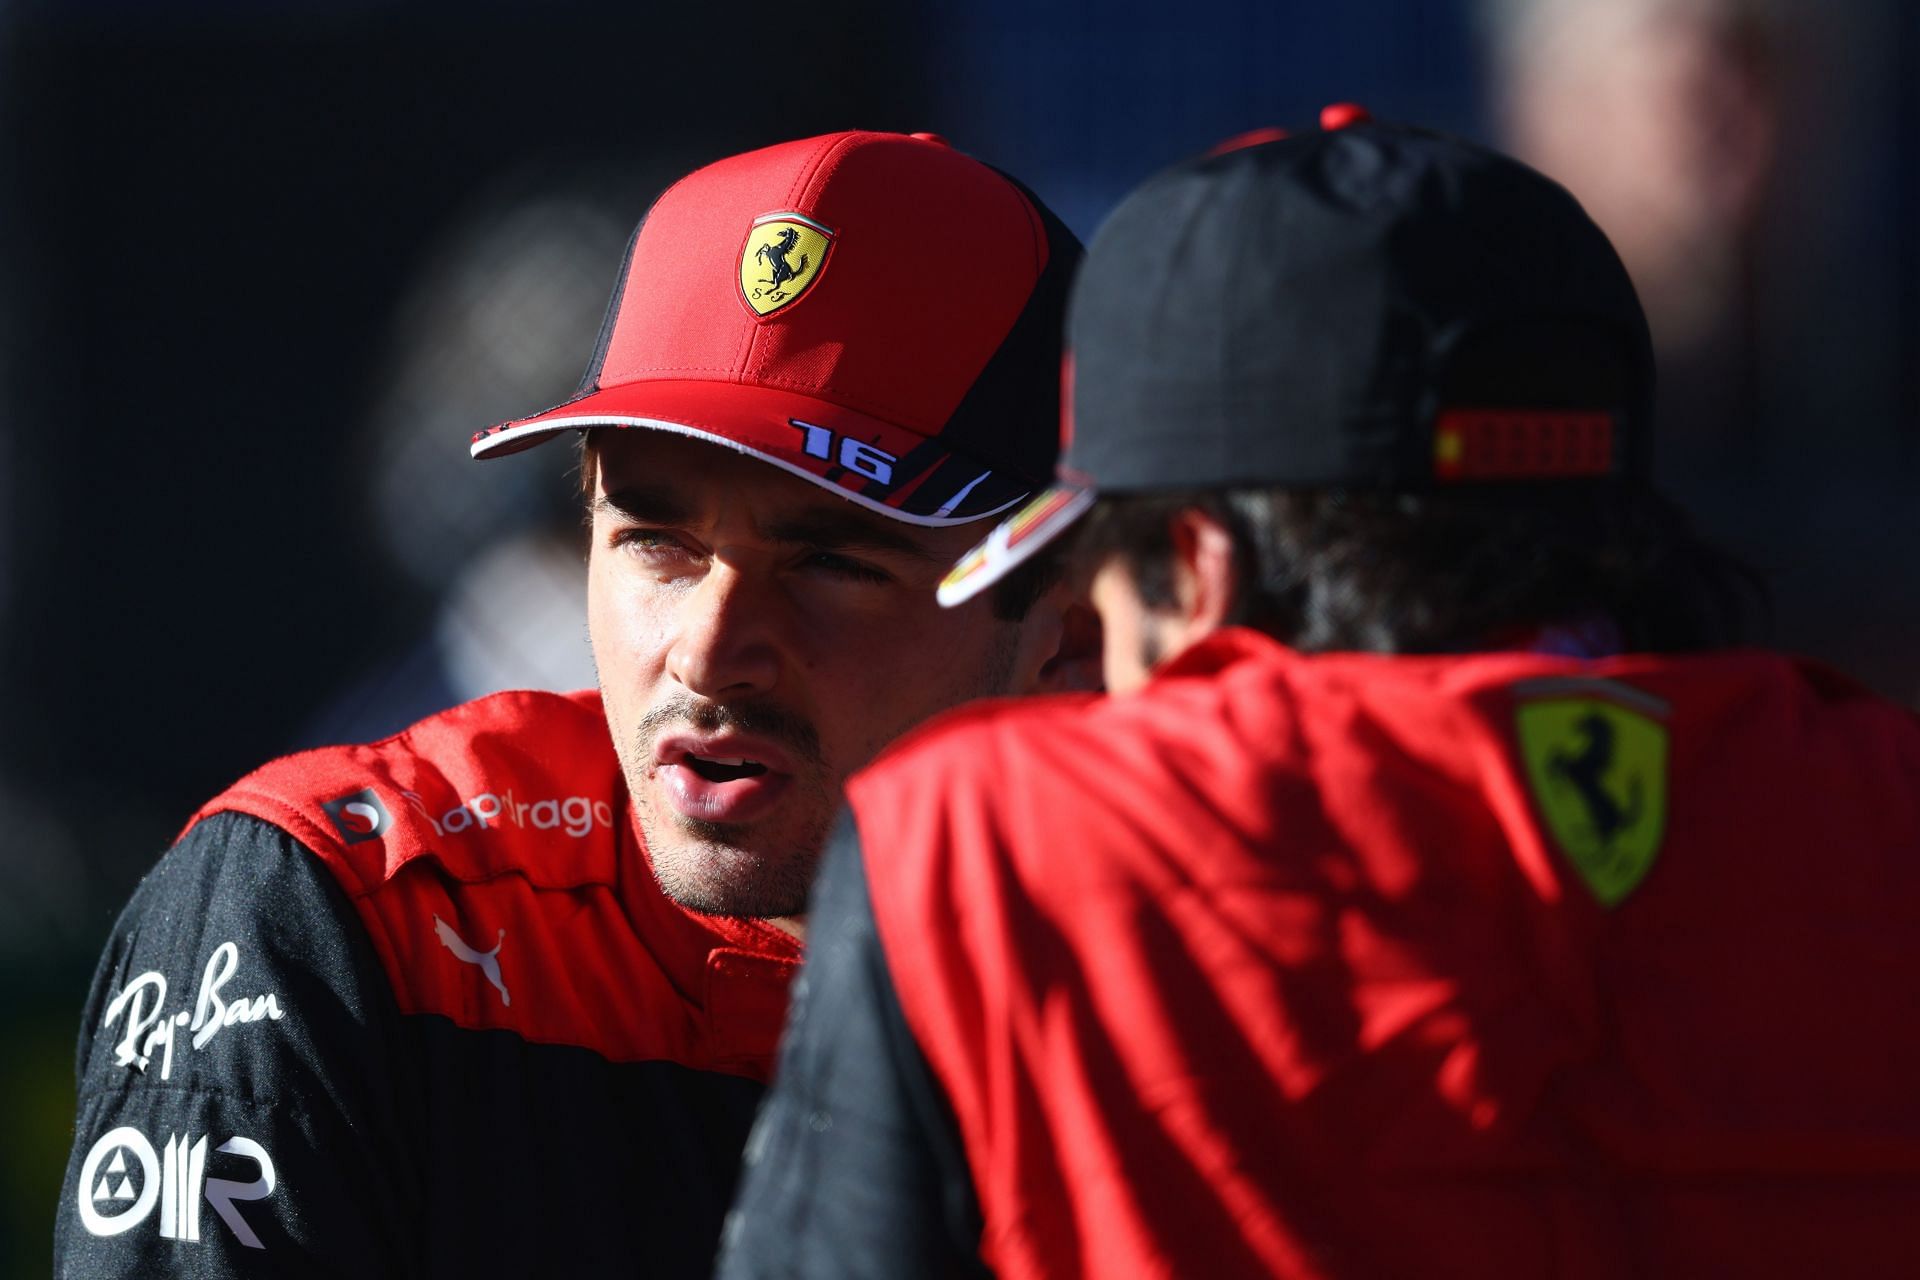 Charles Leclerc and Carlos Sainz at the F1 Grand Prix of Austria -